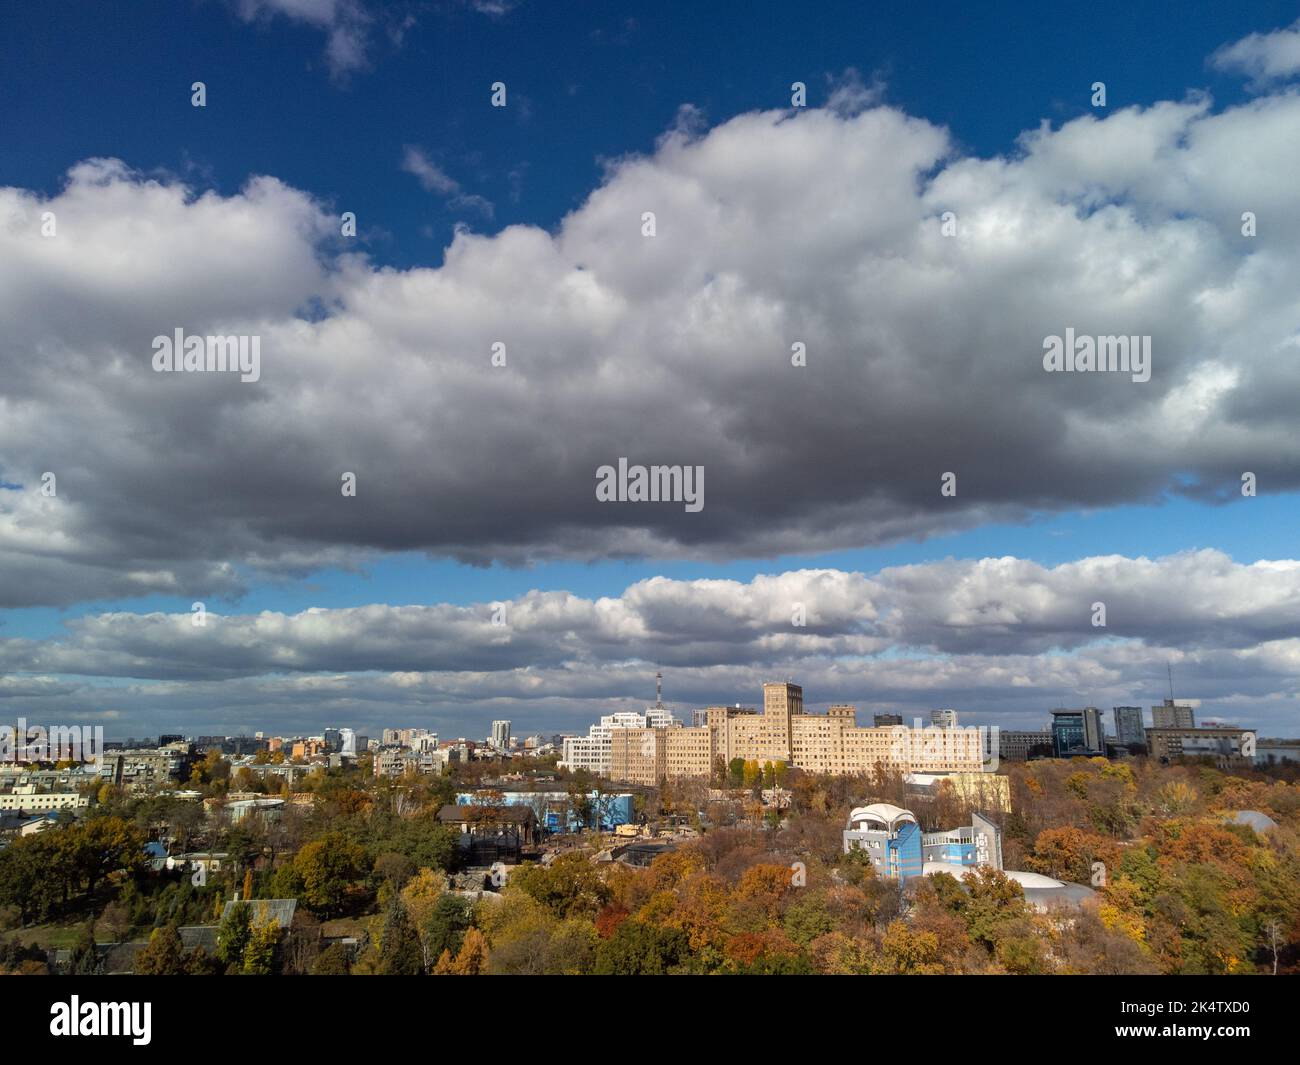 Aerial autumn historical university buildings in city center. Tourist attractions near Shevchenko City Garden park with scenic sky in Kharkiv, Ukraine Stock Photo